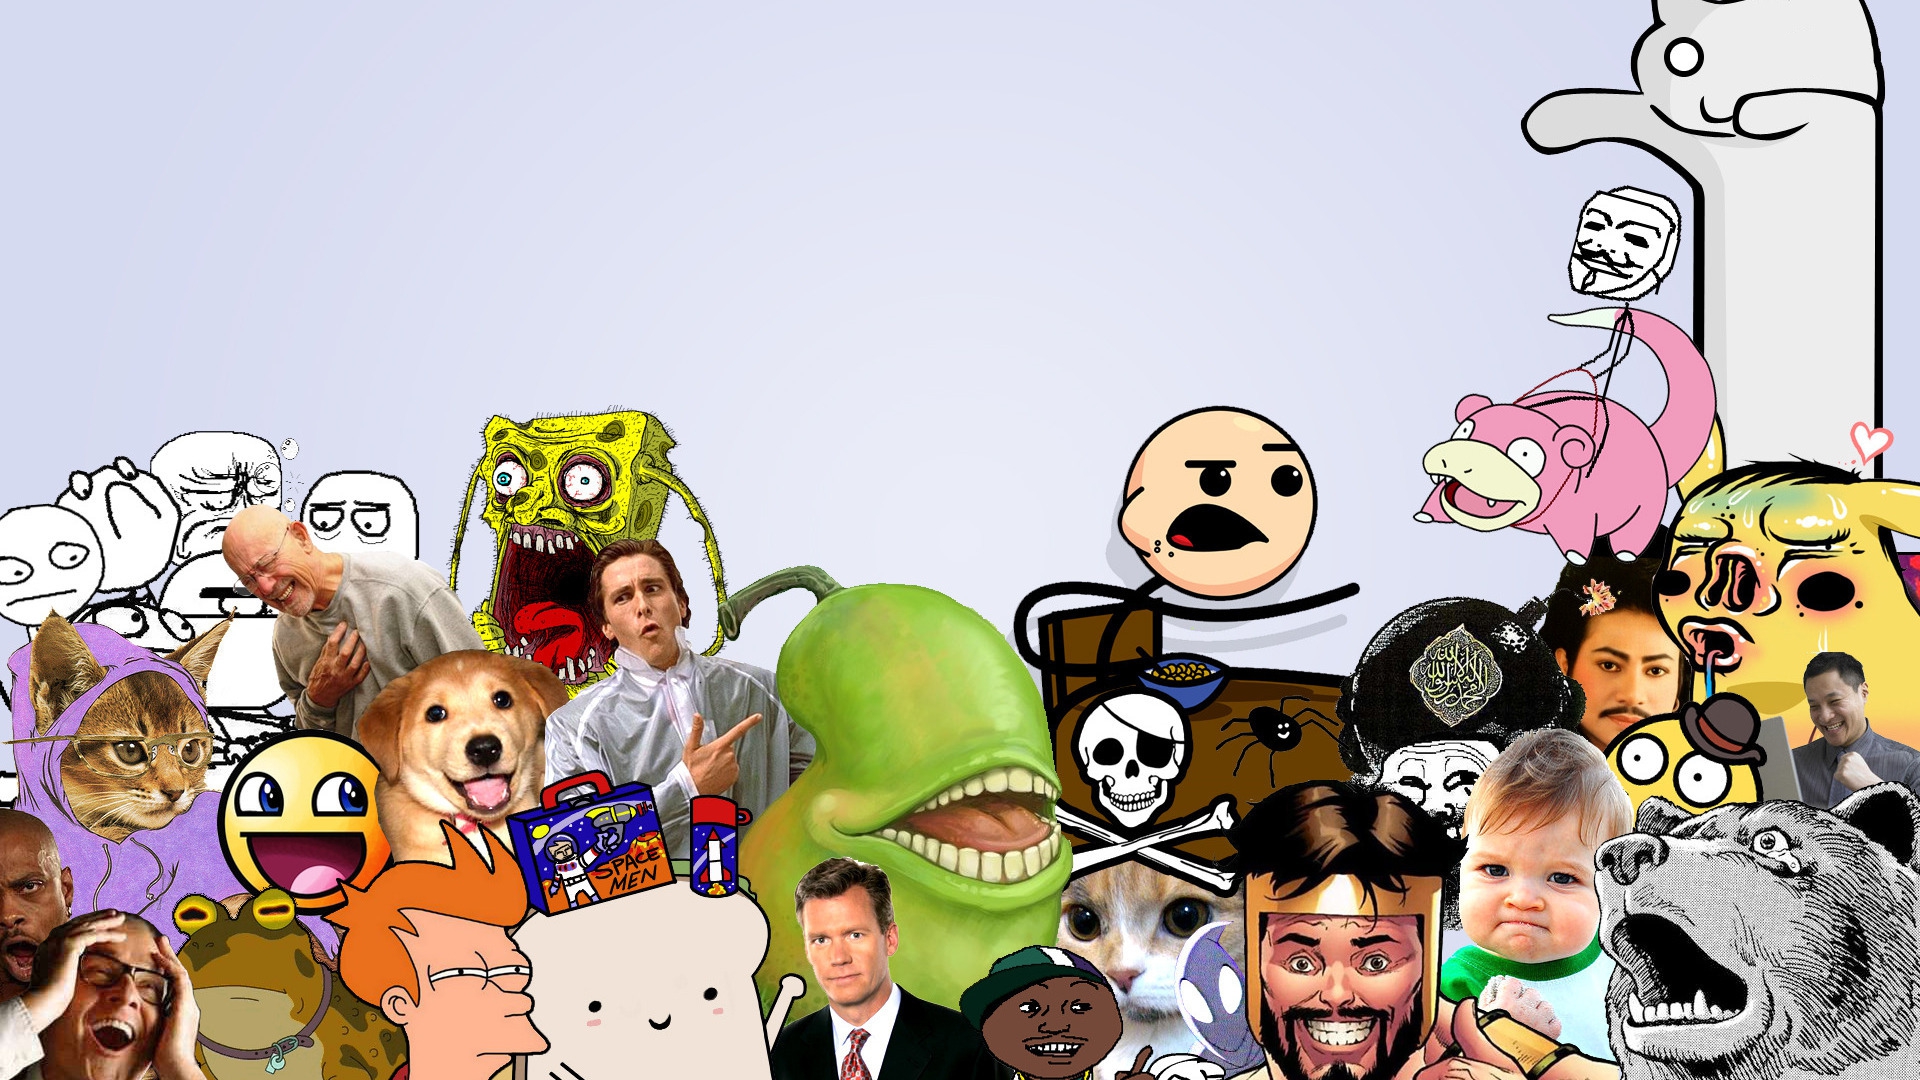 meme wallpaper,animated cartoon,cartoon,social group,illustration,art